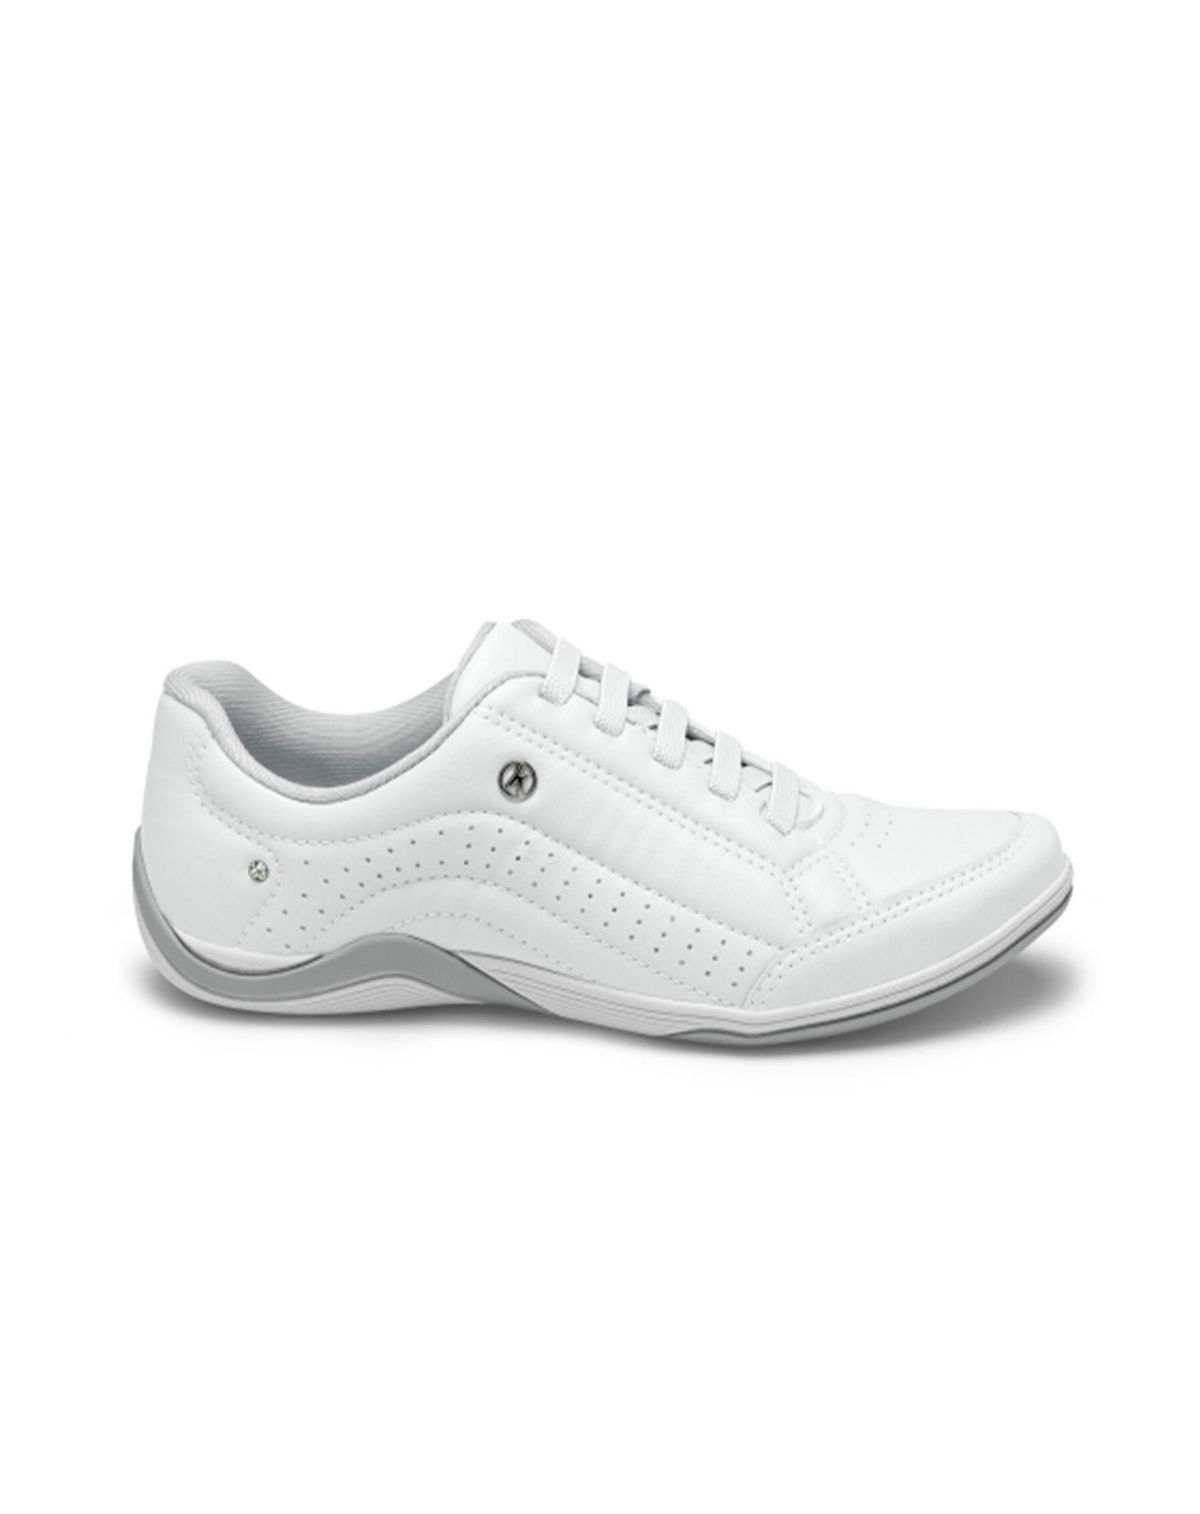 700895001-tenis-kolosh-casual-feminino-cadarco-elastico-off-white-34-417